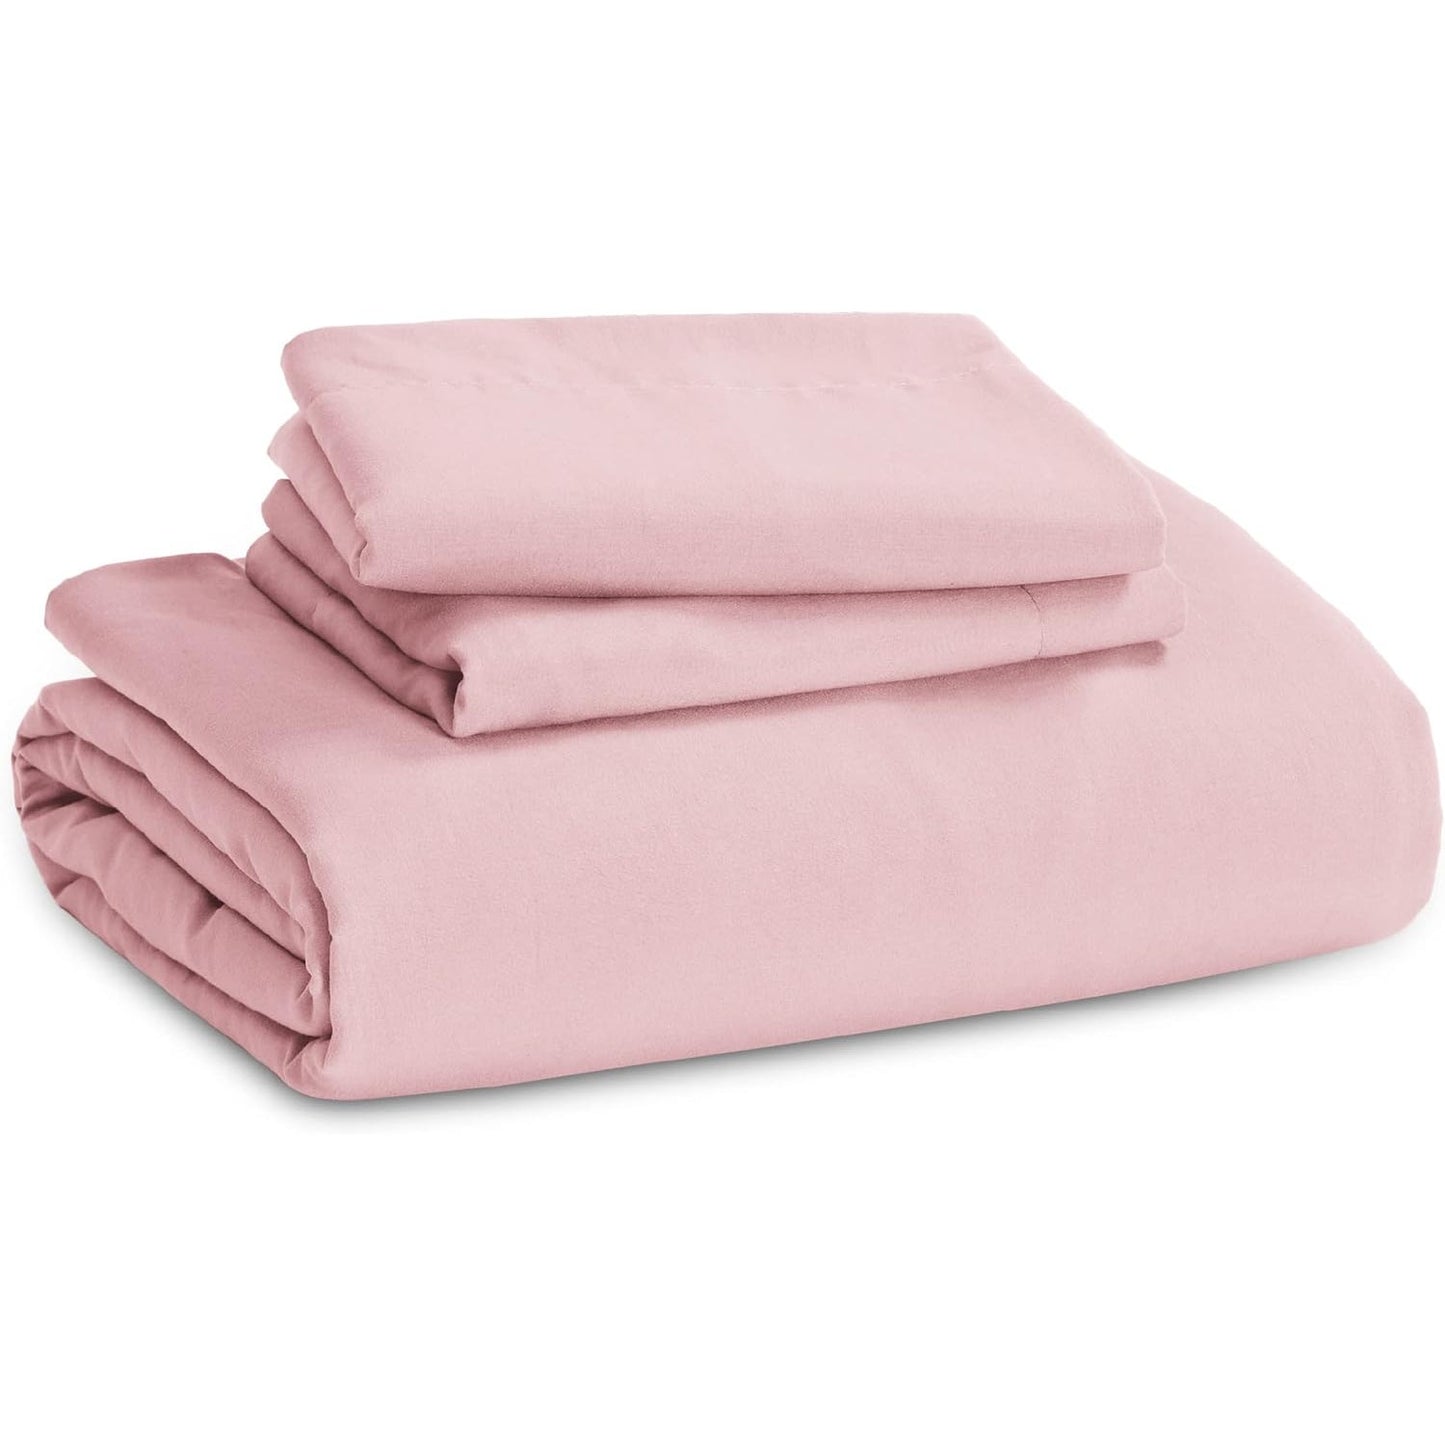 BedSure Pink Duvet Cover King Size (104x90) & 2 Pillow Shams - Soft Prewashed